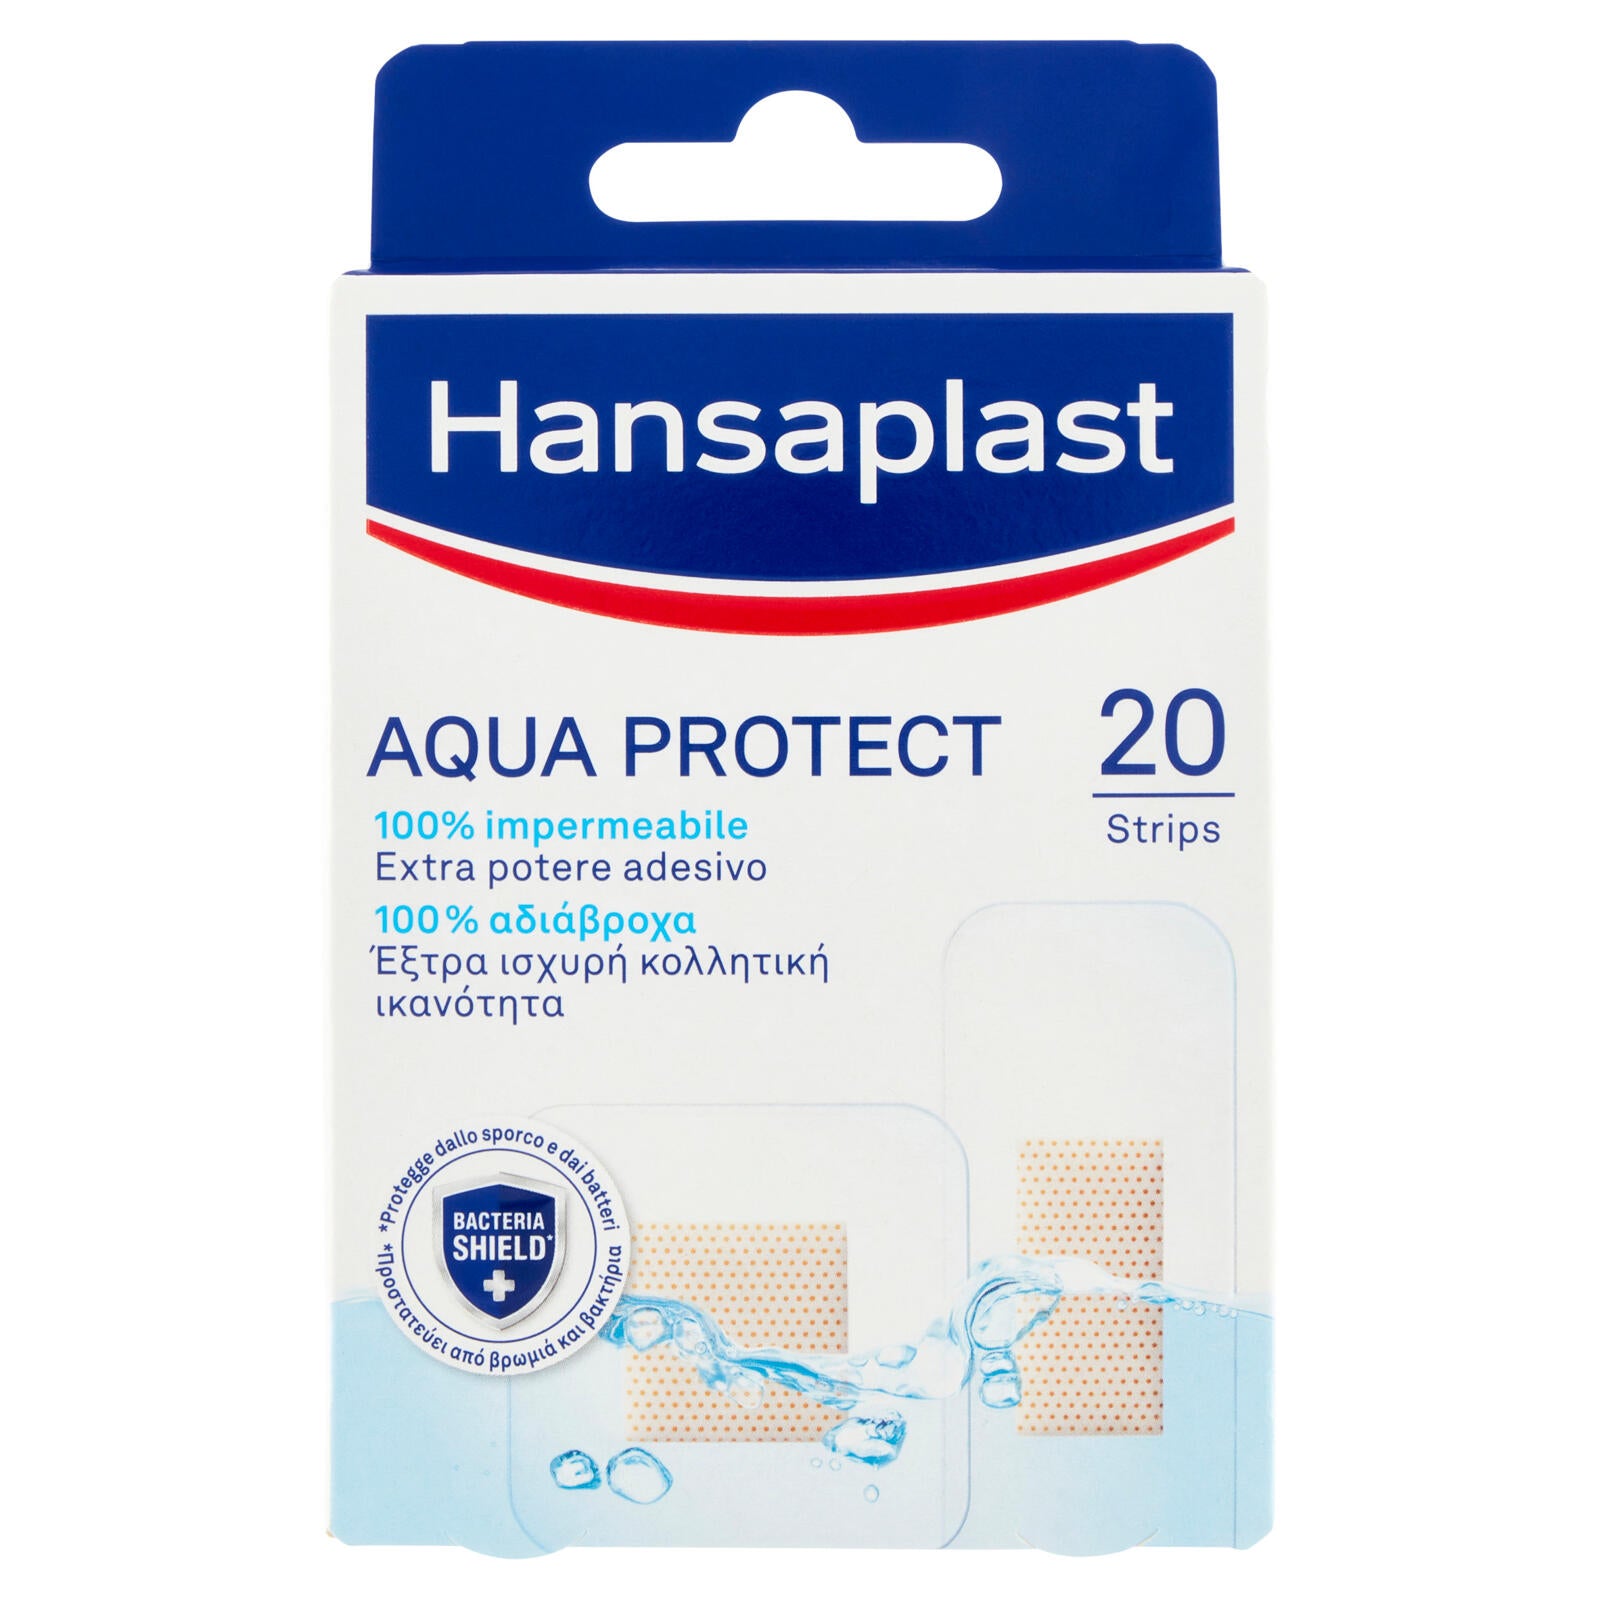 Hansaplast Aqua Protect 20 pz